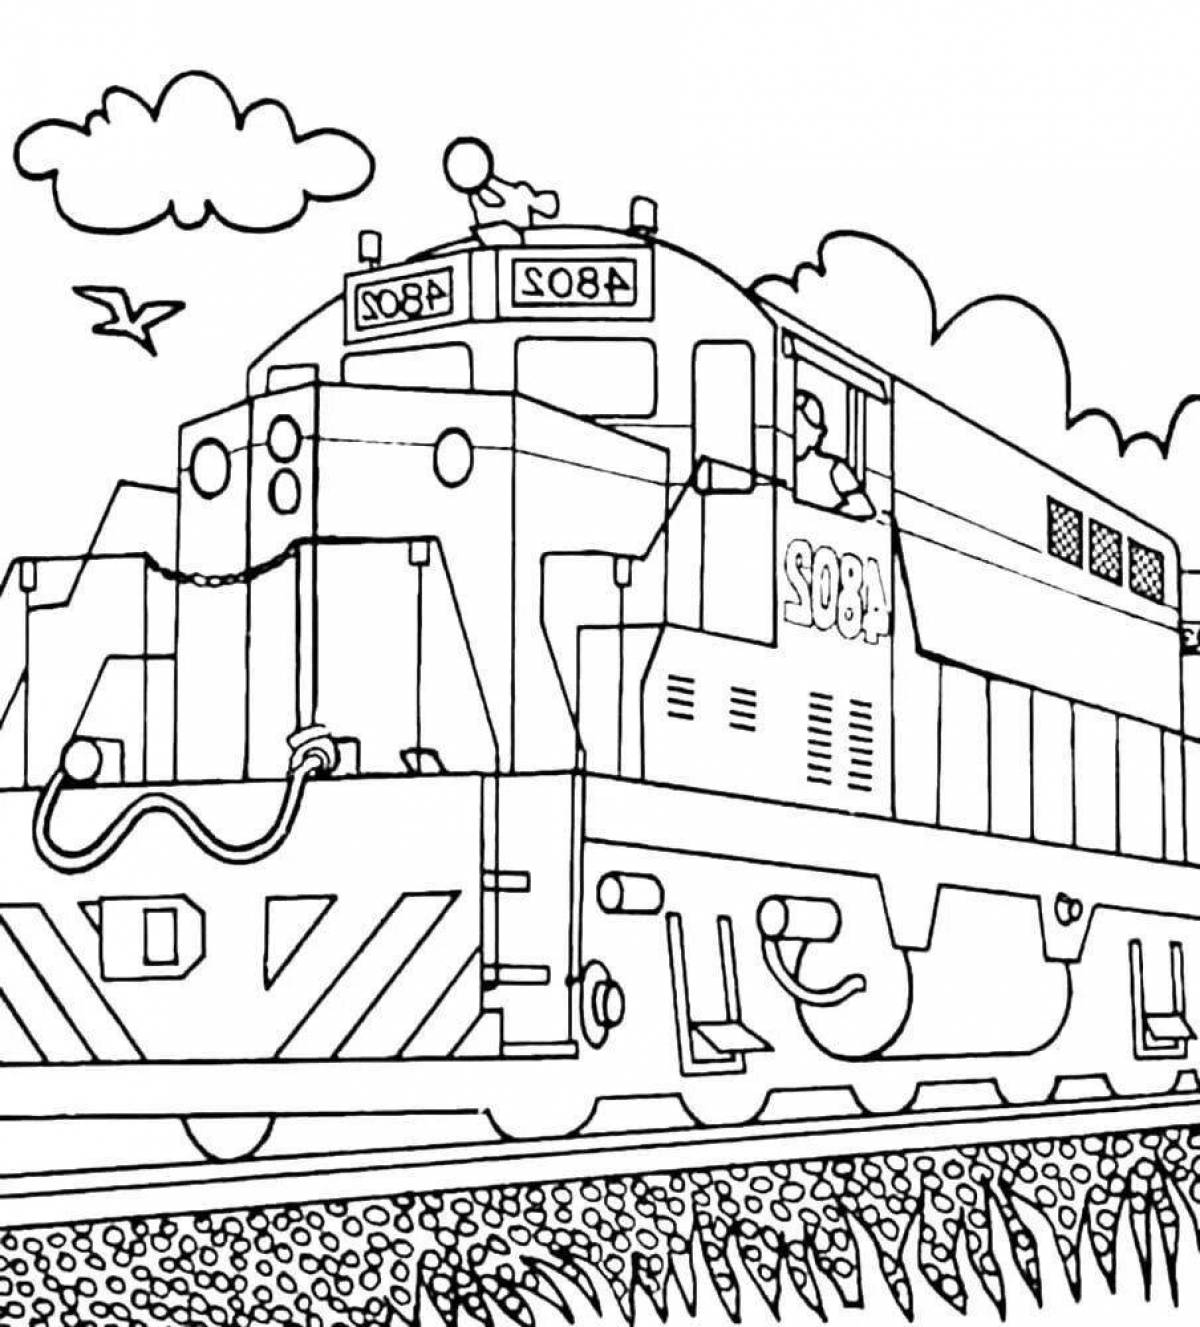 Coloring page nice locomotive